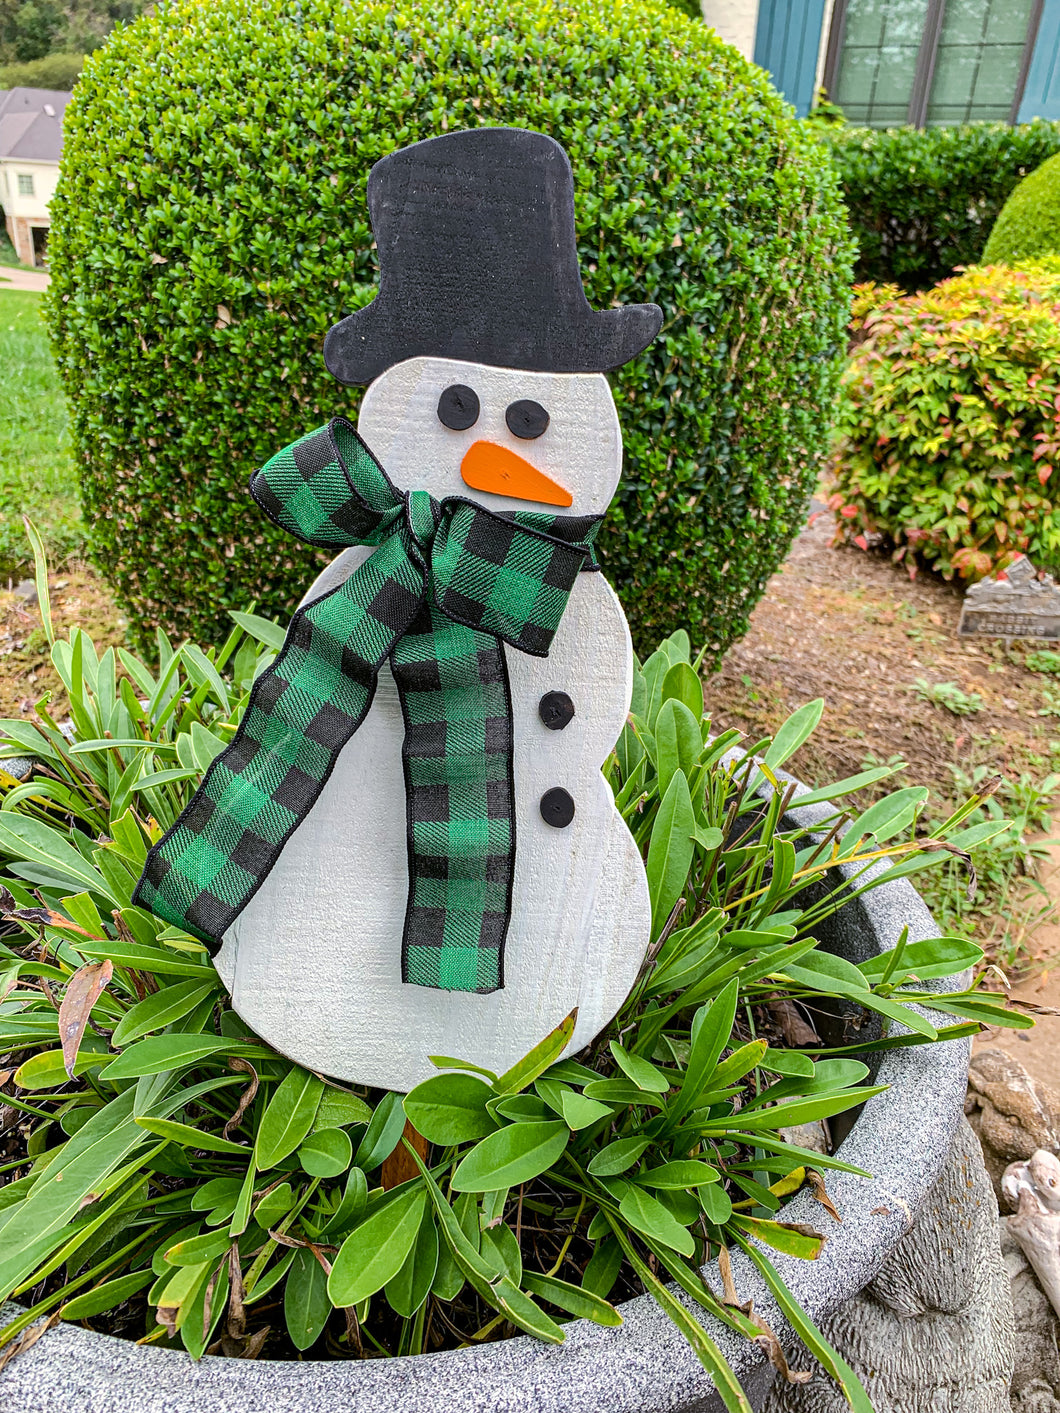 Outdoor Snow Man with Green Plaid Muffler